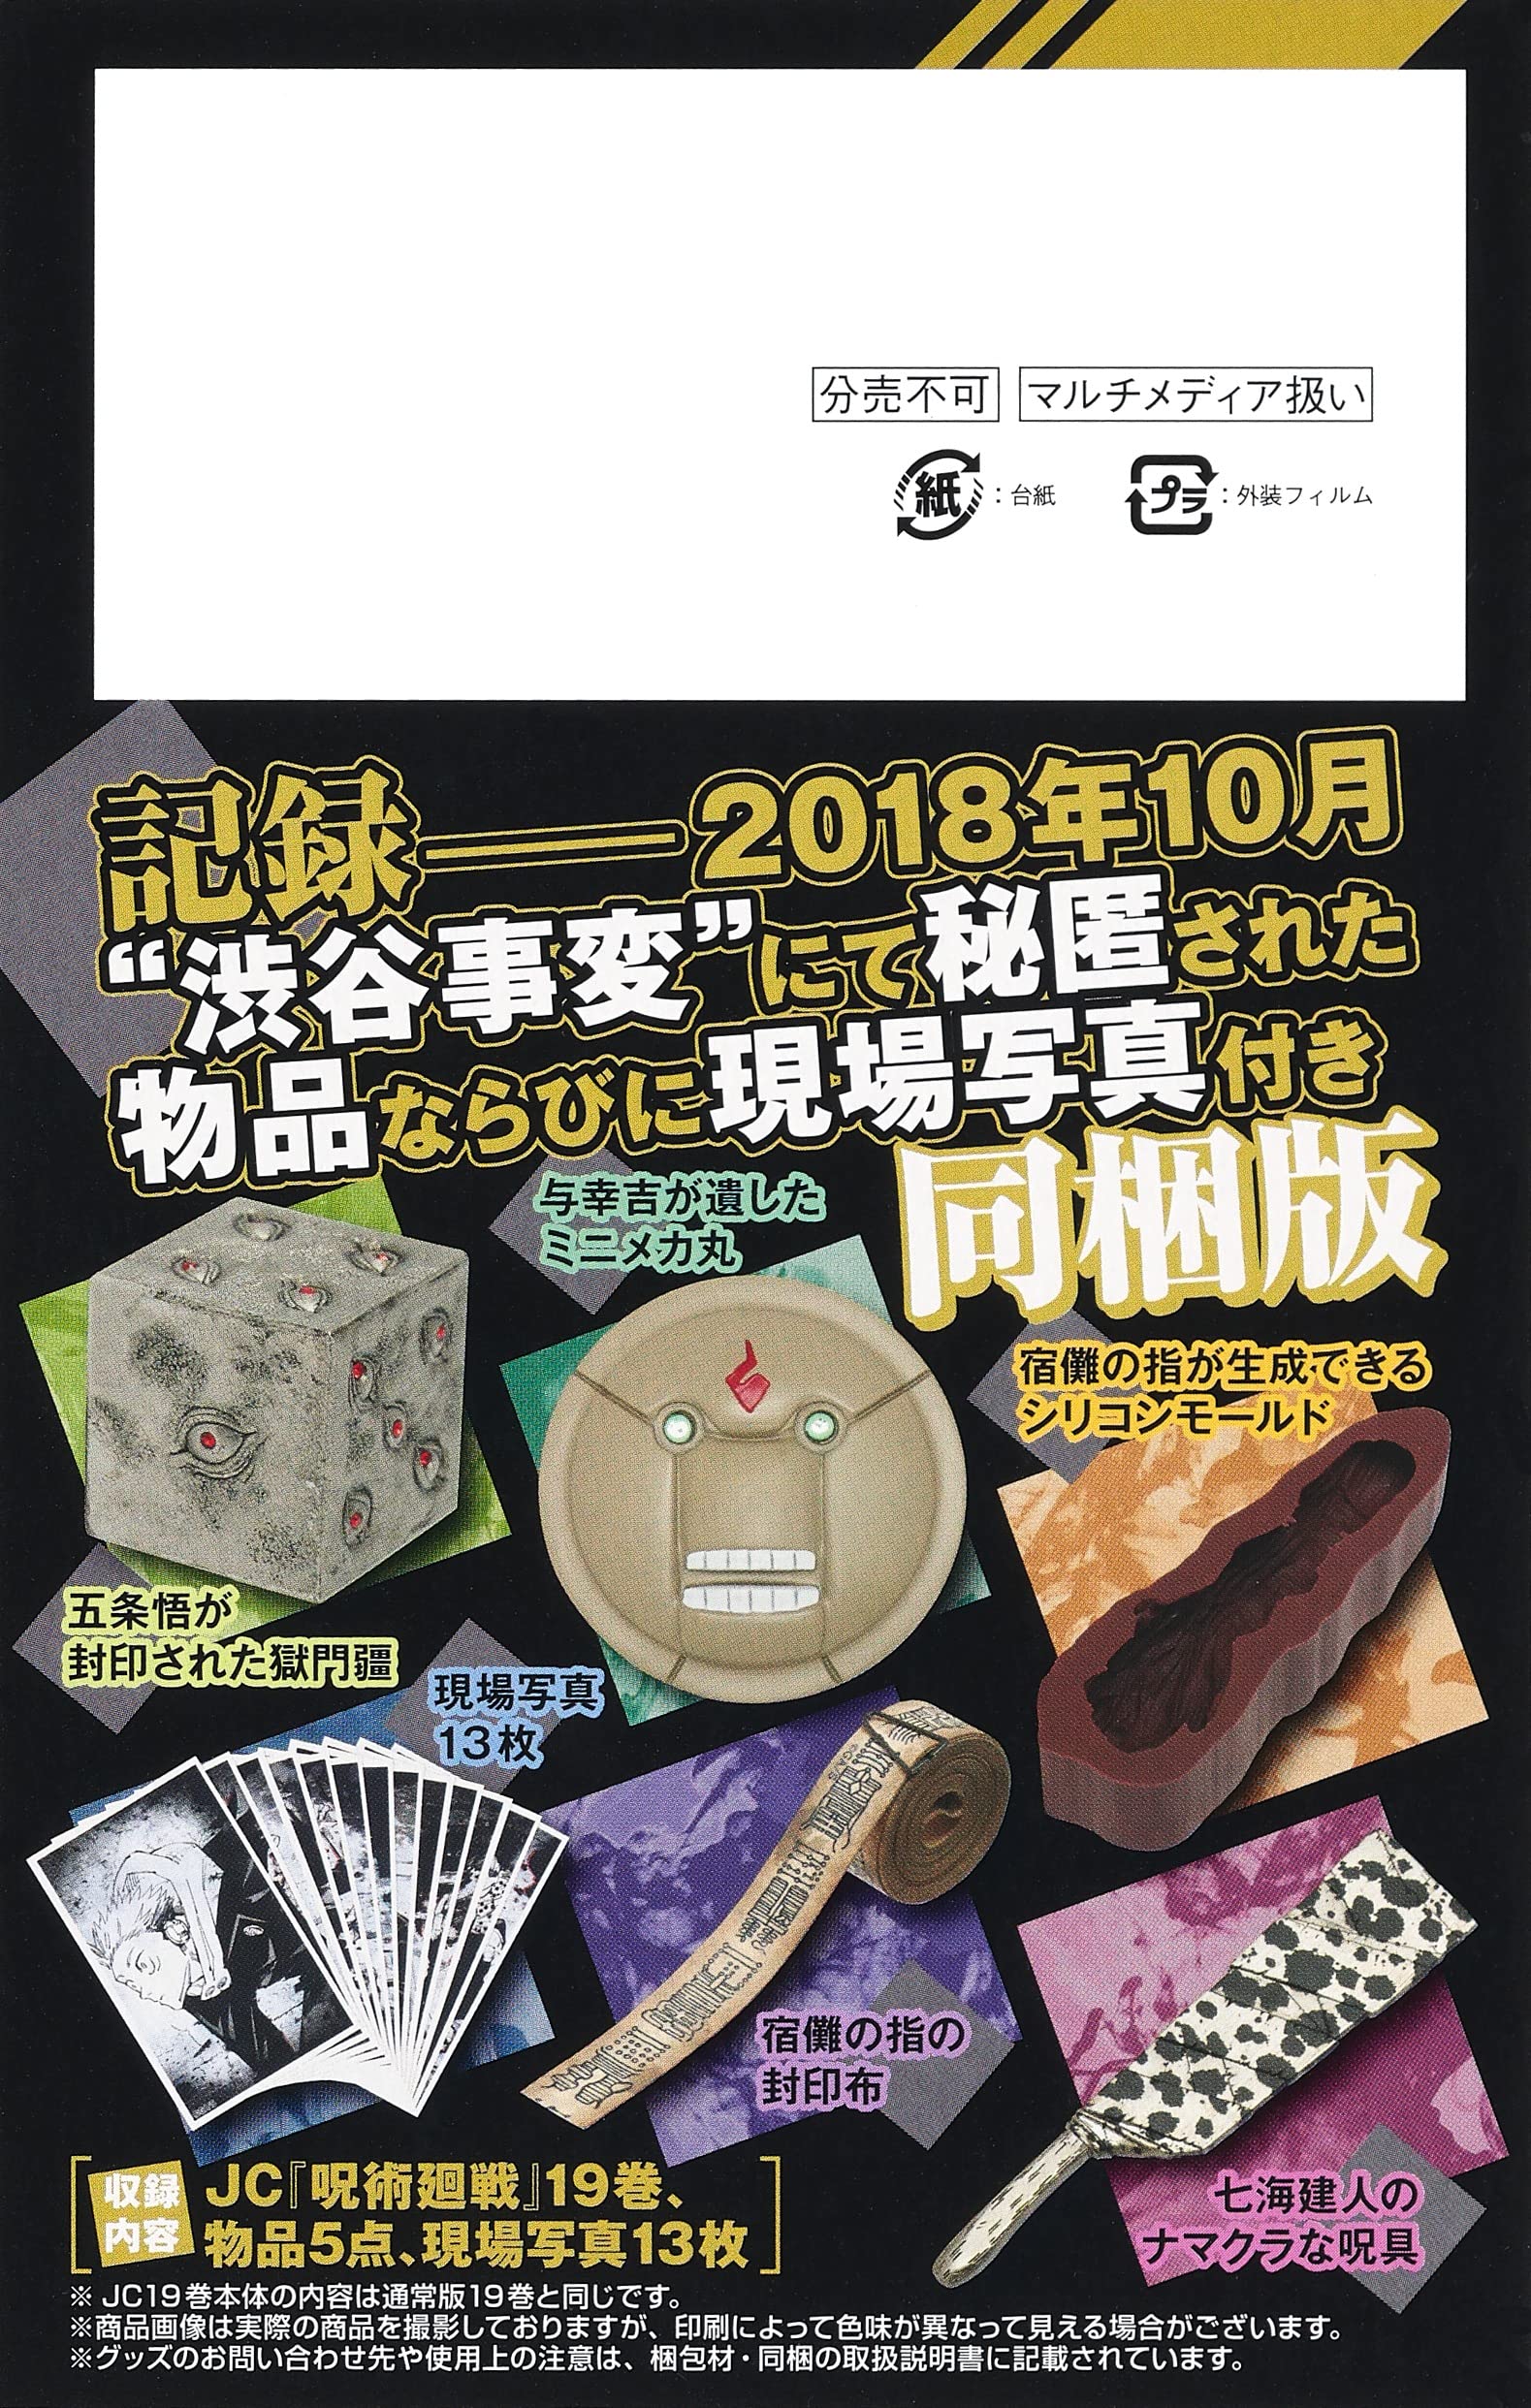 Damaged goods] B2 announcement poster Jujutsu Kaisen Shibuya Incident, Goods / Accessories